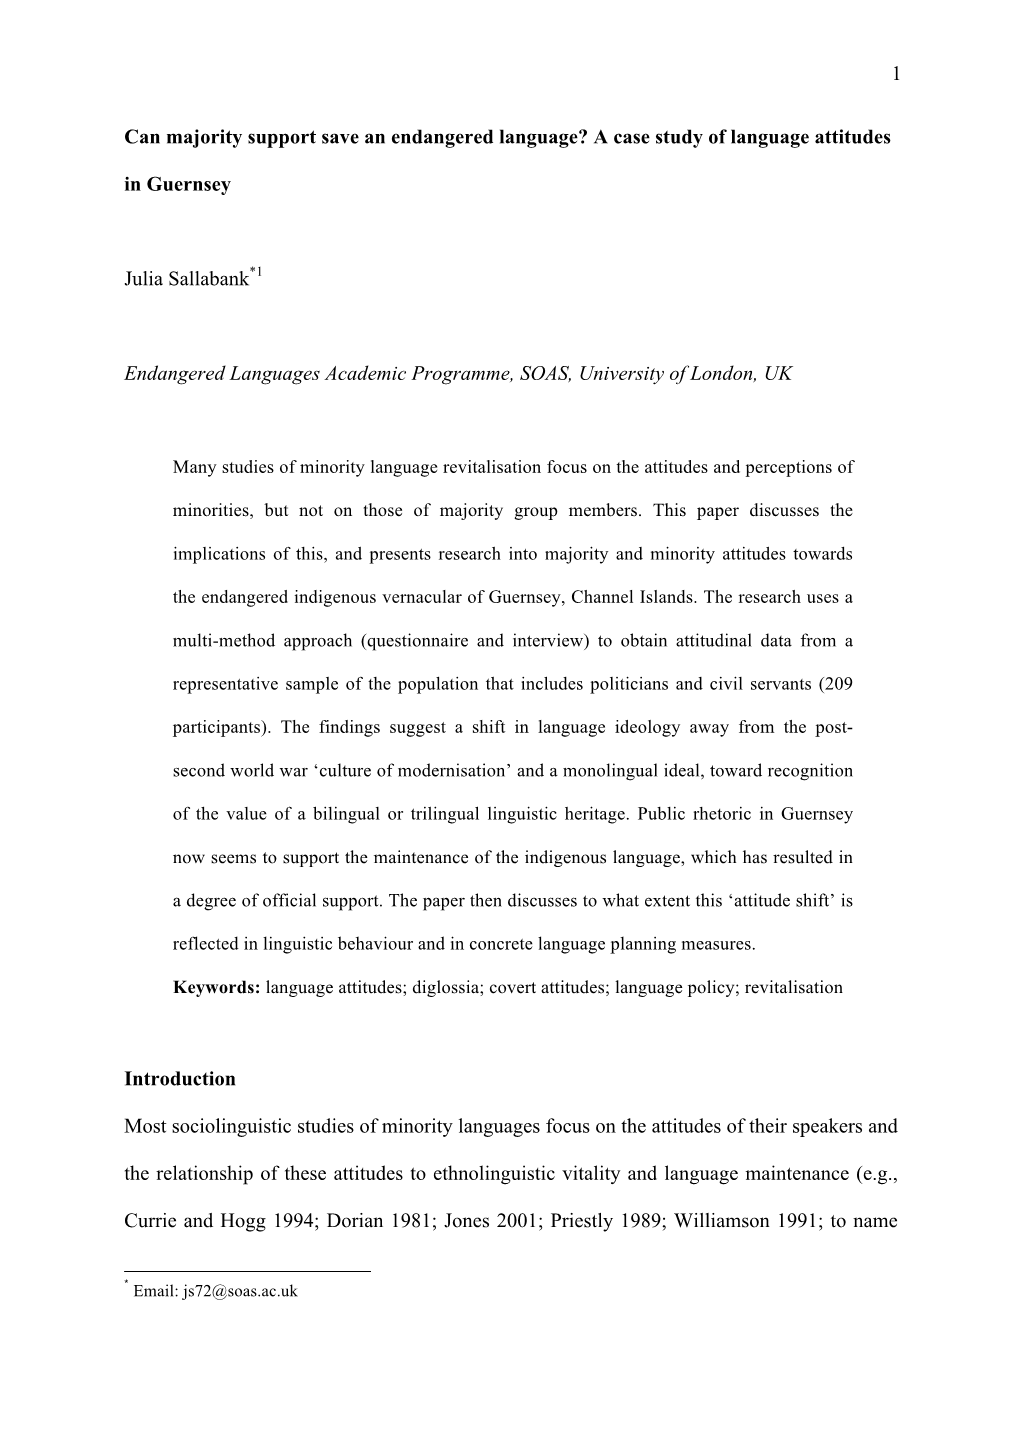 A Case Study of Language Attitudes in Guernsey Julia Sallabank*1